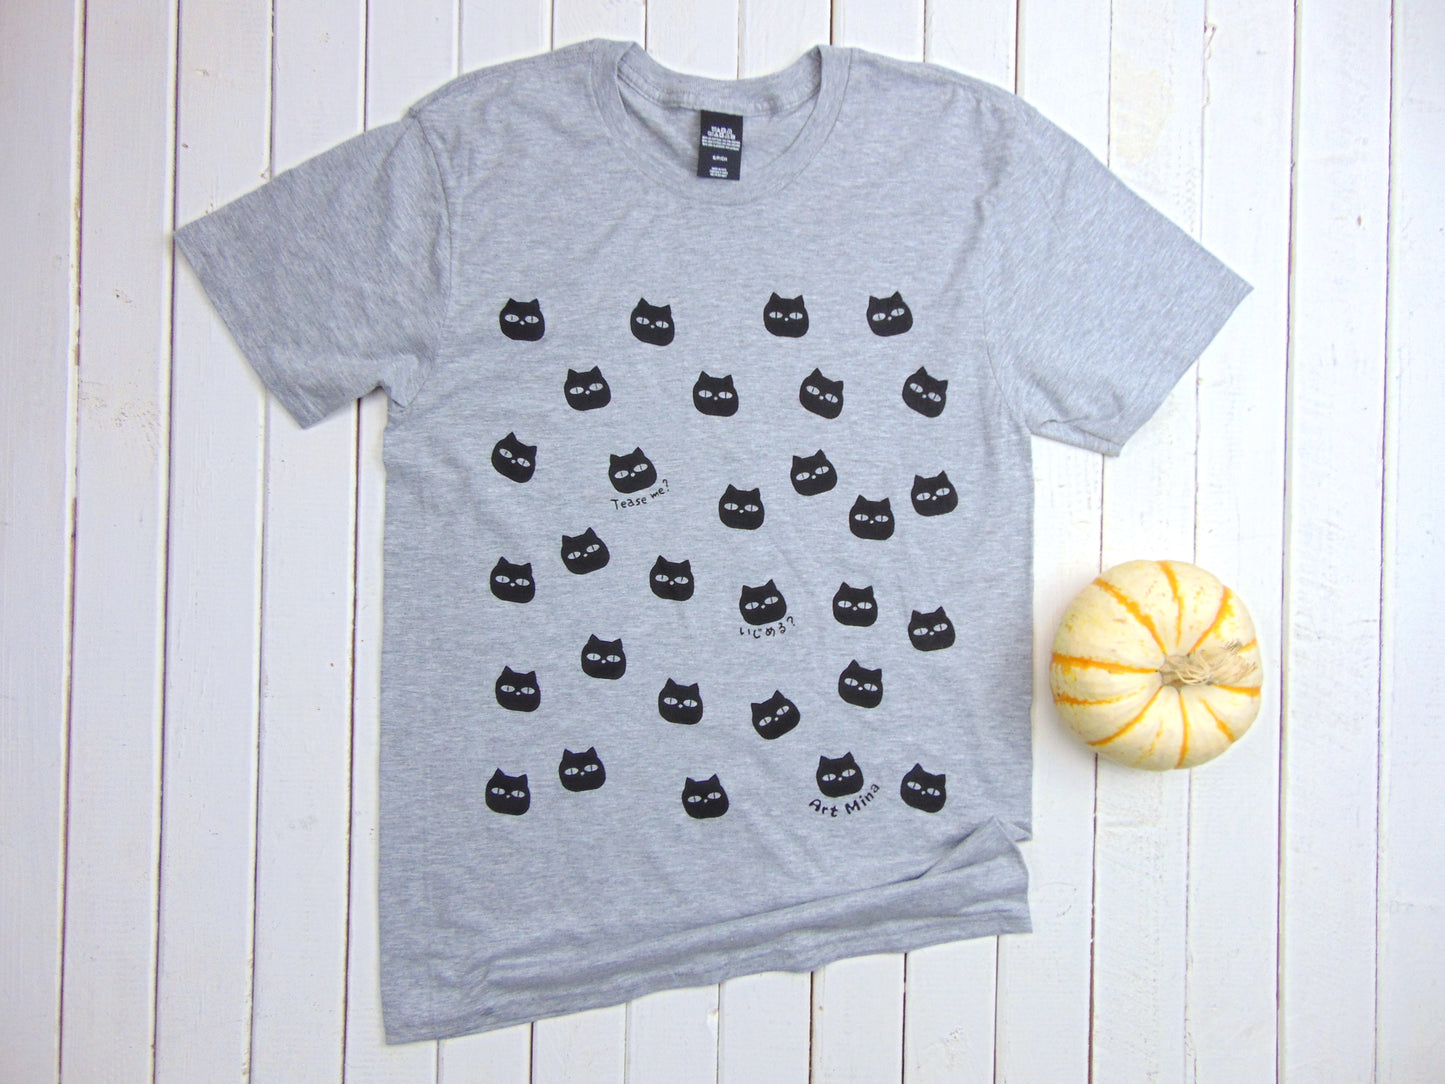 Unisex Soft T-shirt Black Cats "Tease Me?" Up to 5XL